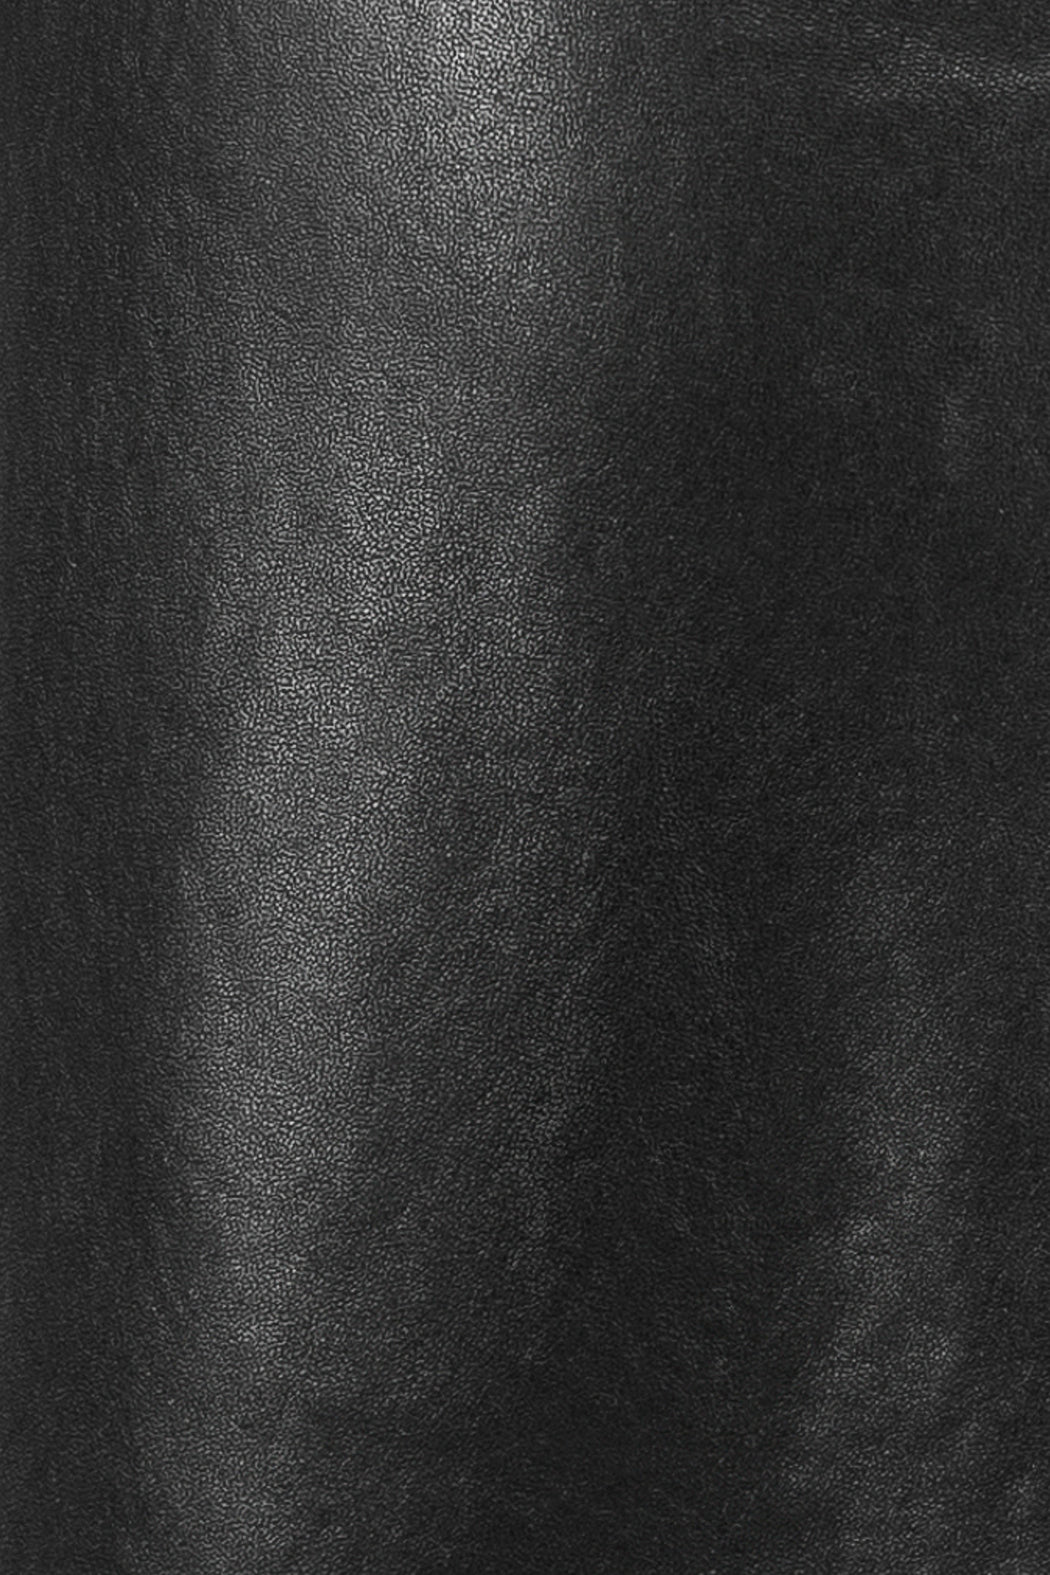 Envelope1976 Jax dress - Leather Dress Black